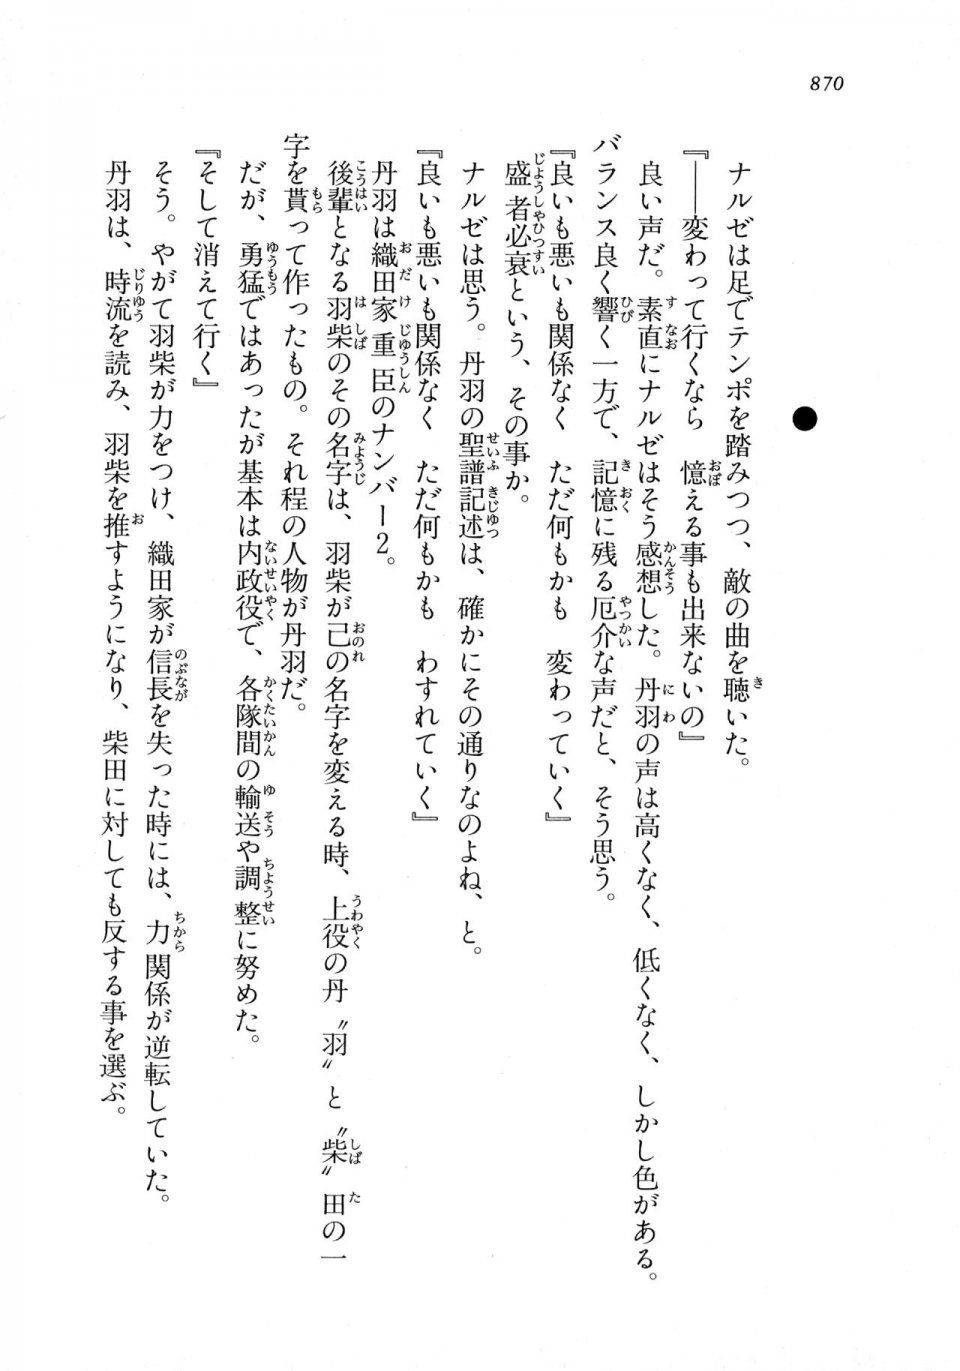 Kyoukai Senjou no Horizon LN Vol 18(7C) Part 2 - Photo #310